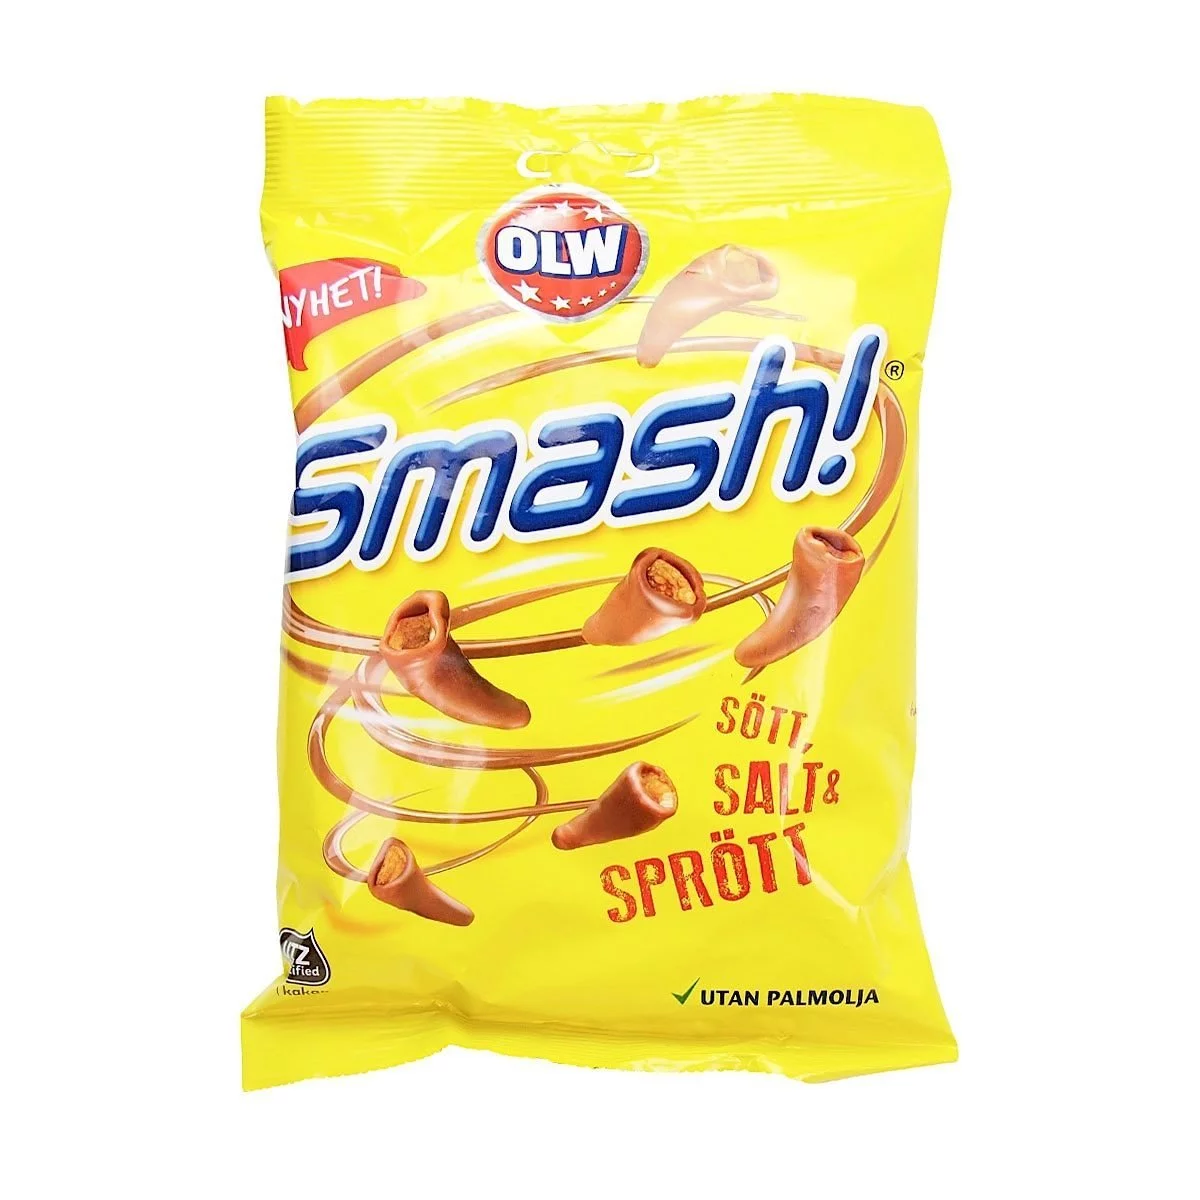 OLW smash! süß, salzig und knusprig (100g) (KiMs Smash!) 1